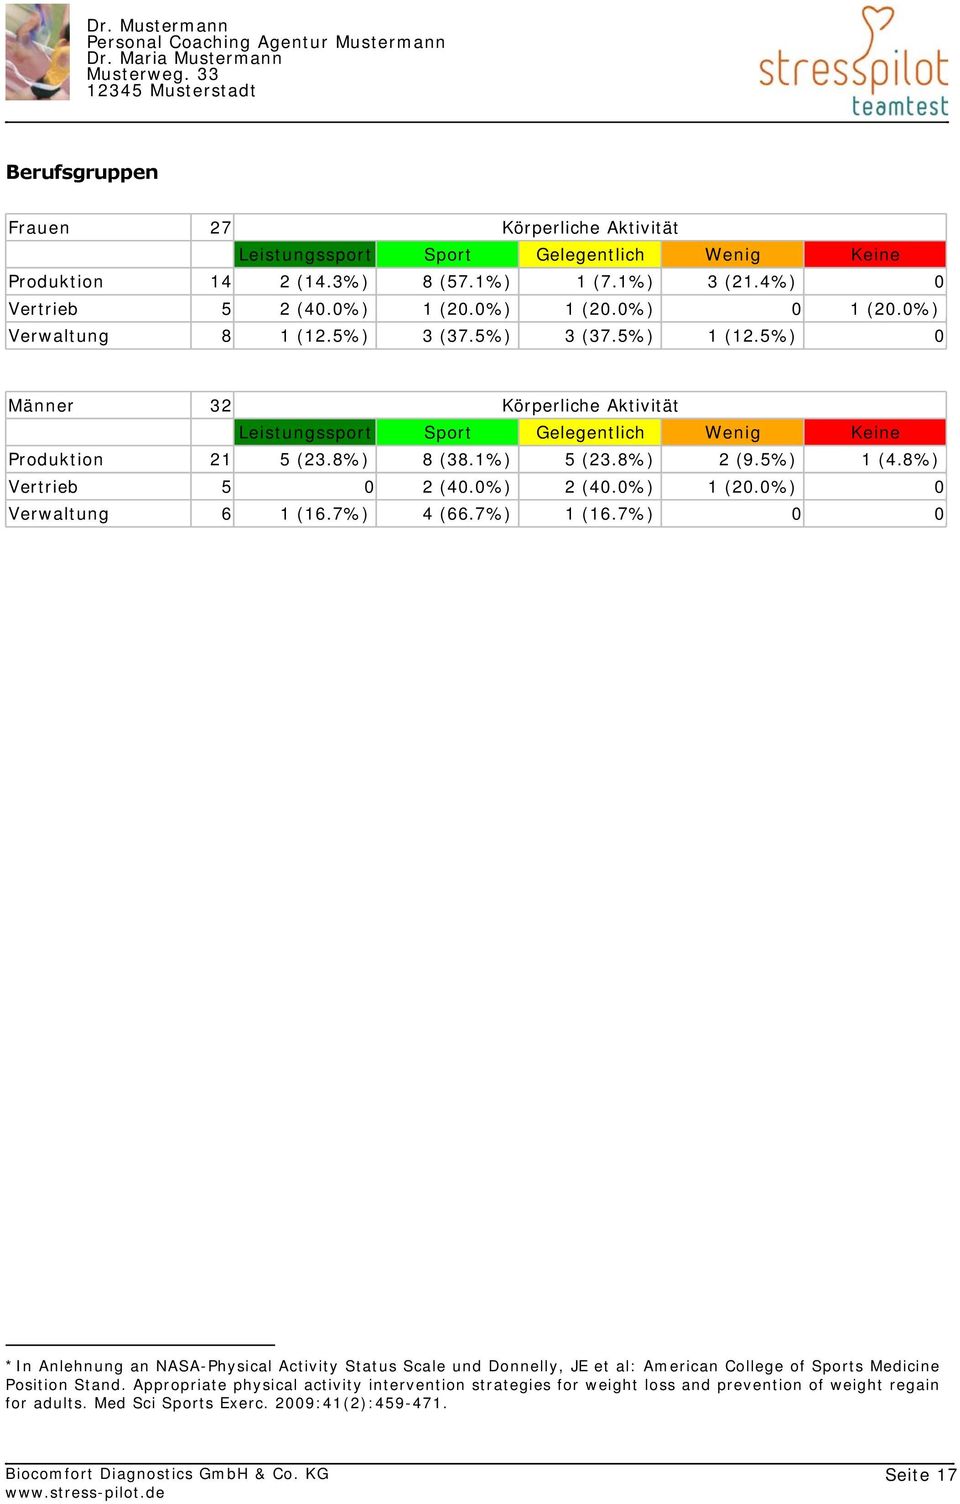 8%) Vertrieb 5 0 2 (40.0%) 2 (40.0%) 1 (20.0%) 0 Verwaltung 6 1 (16.7%) 4 (66.7%) 1 (16.